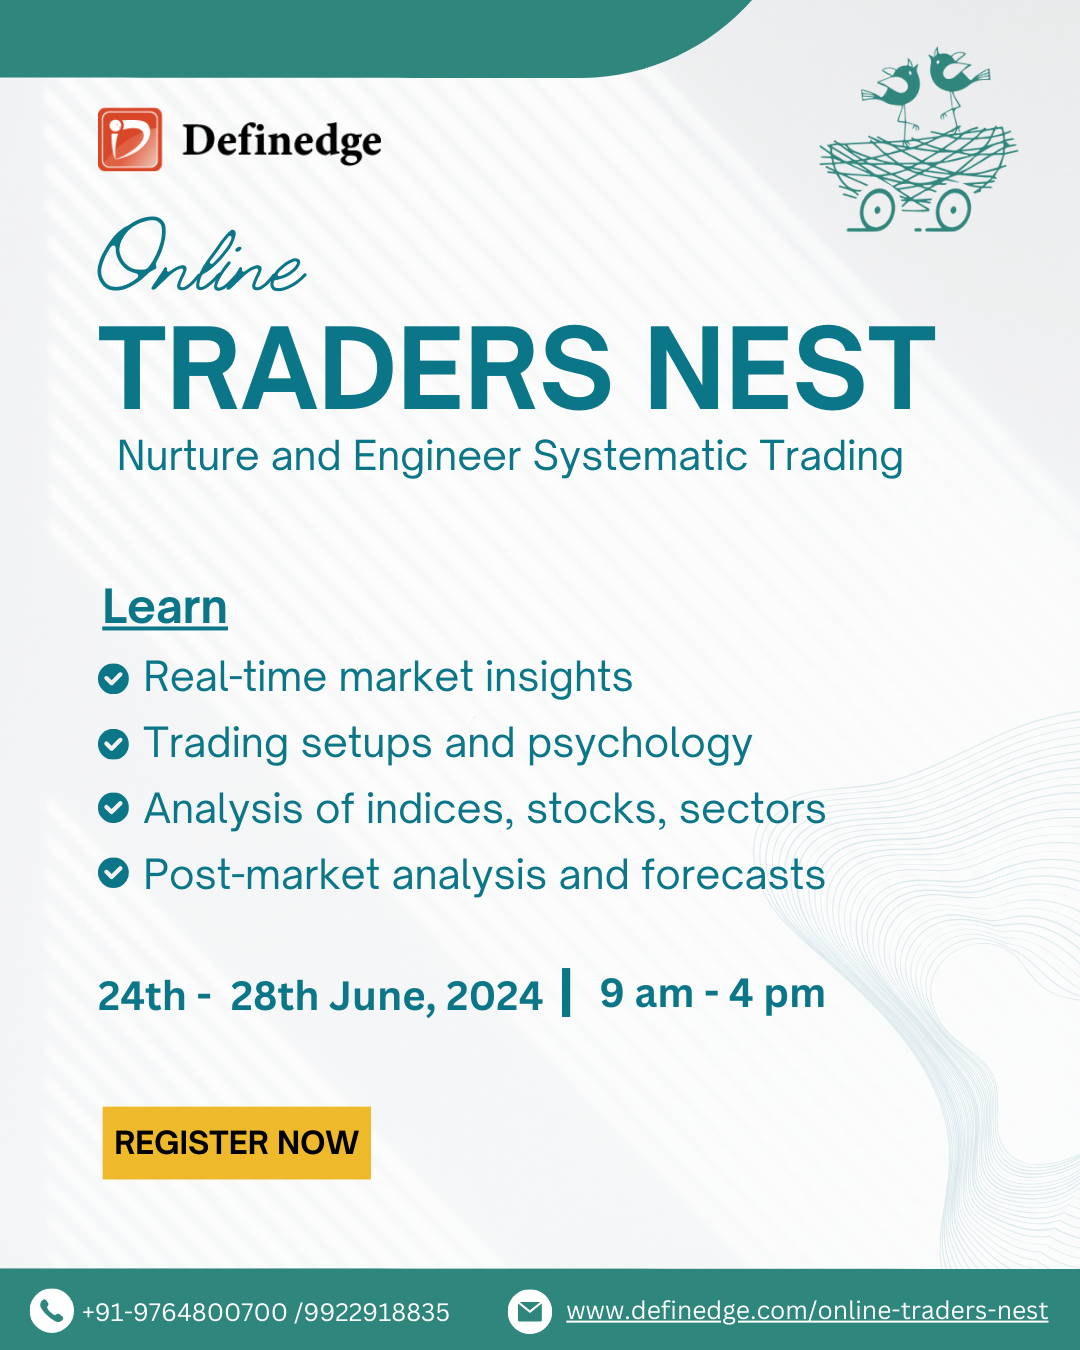 Definedge_Online_Traders_Nest 1.png